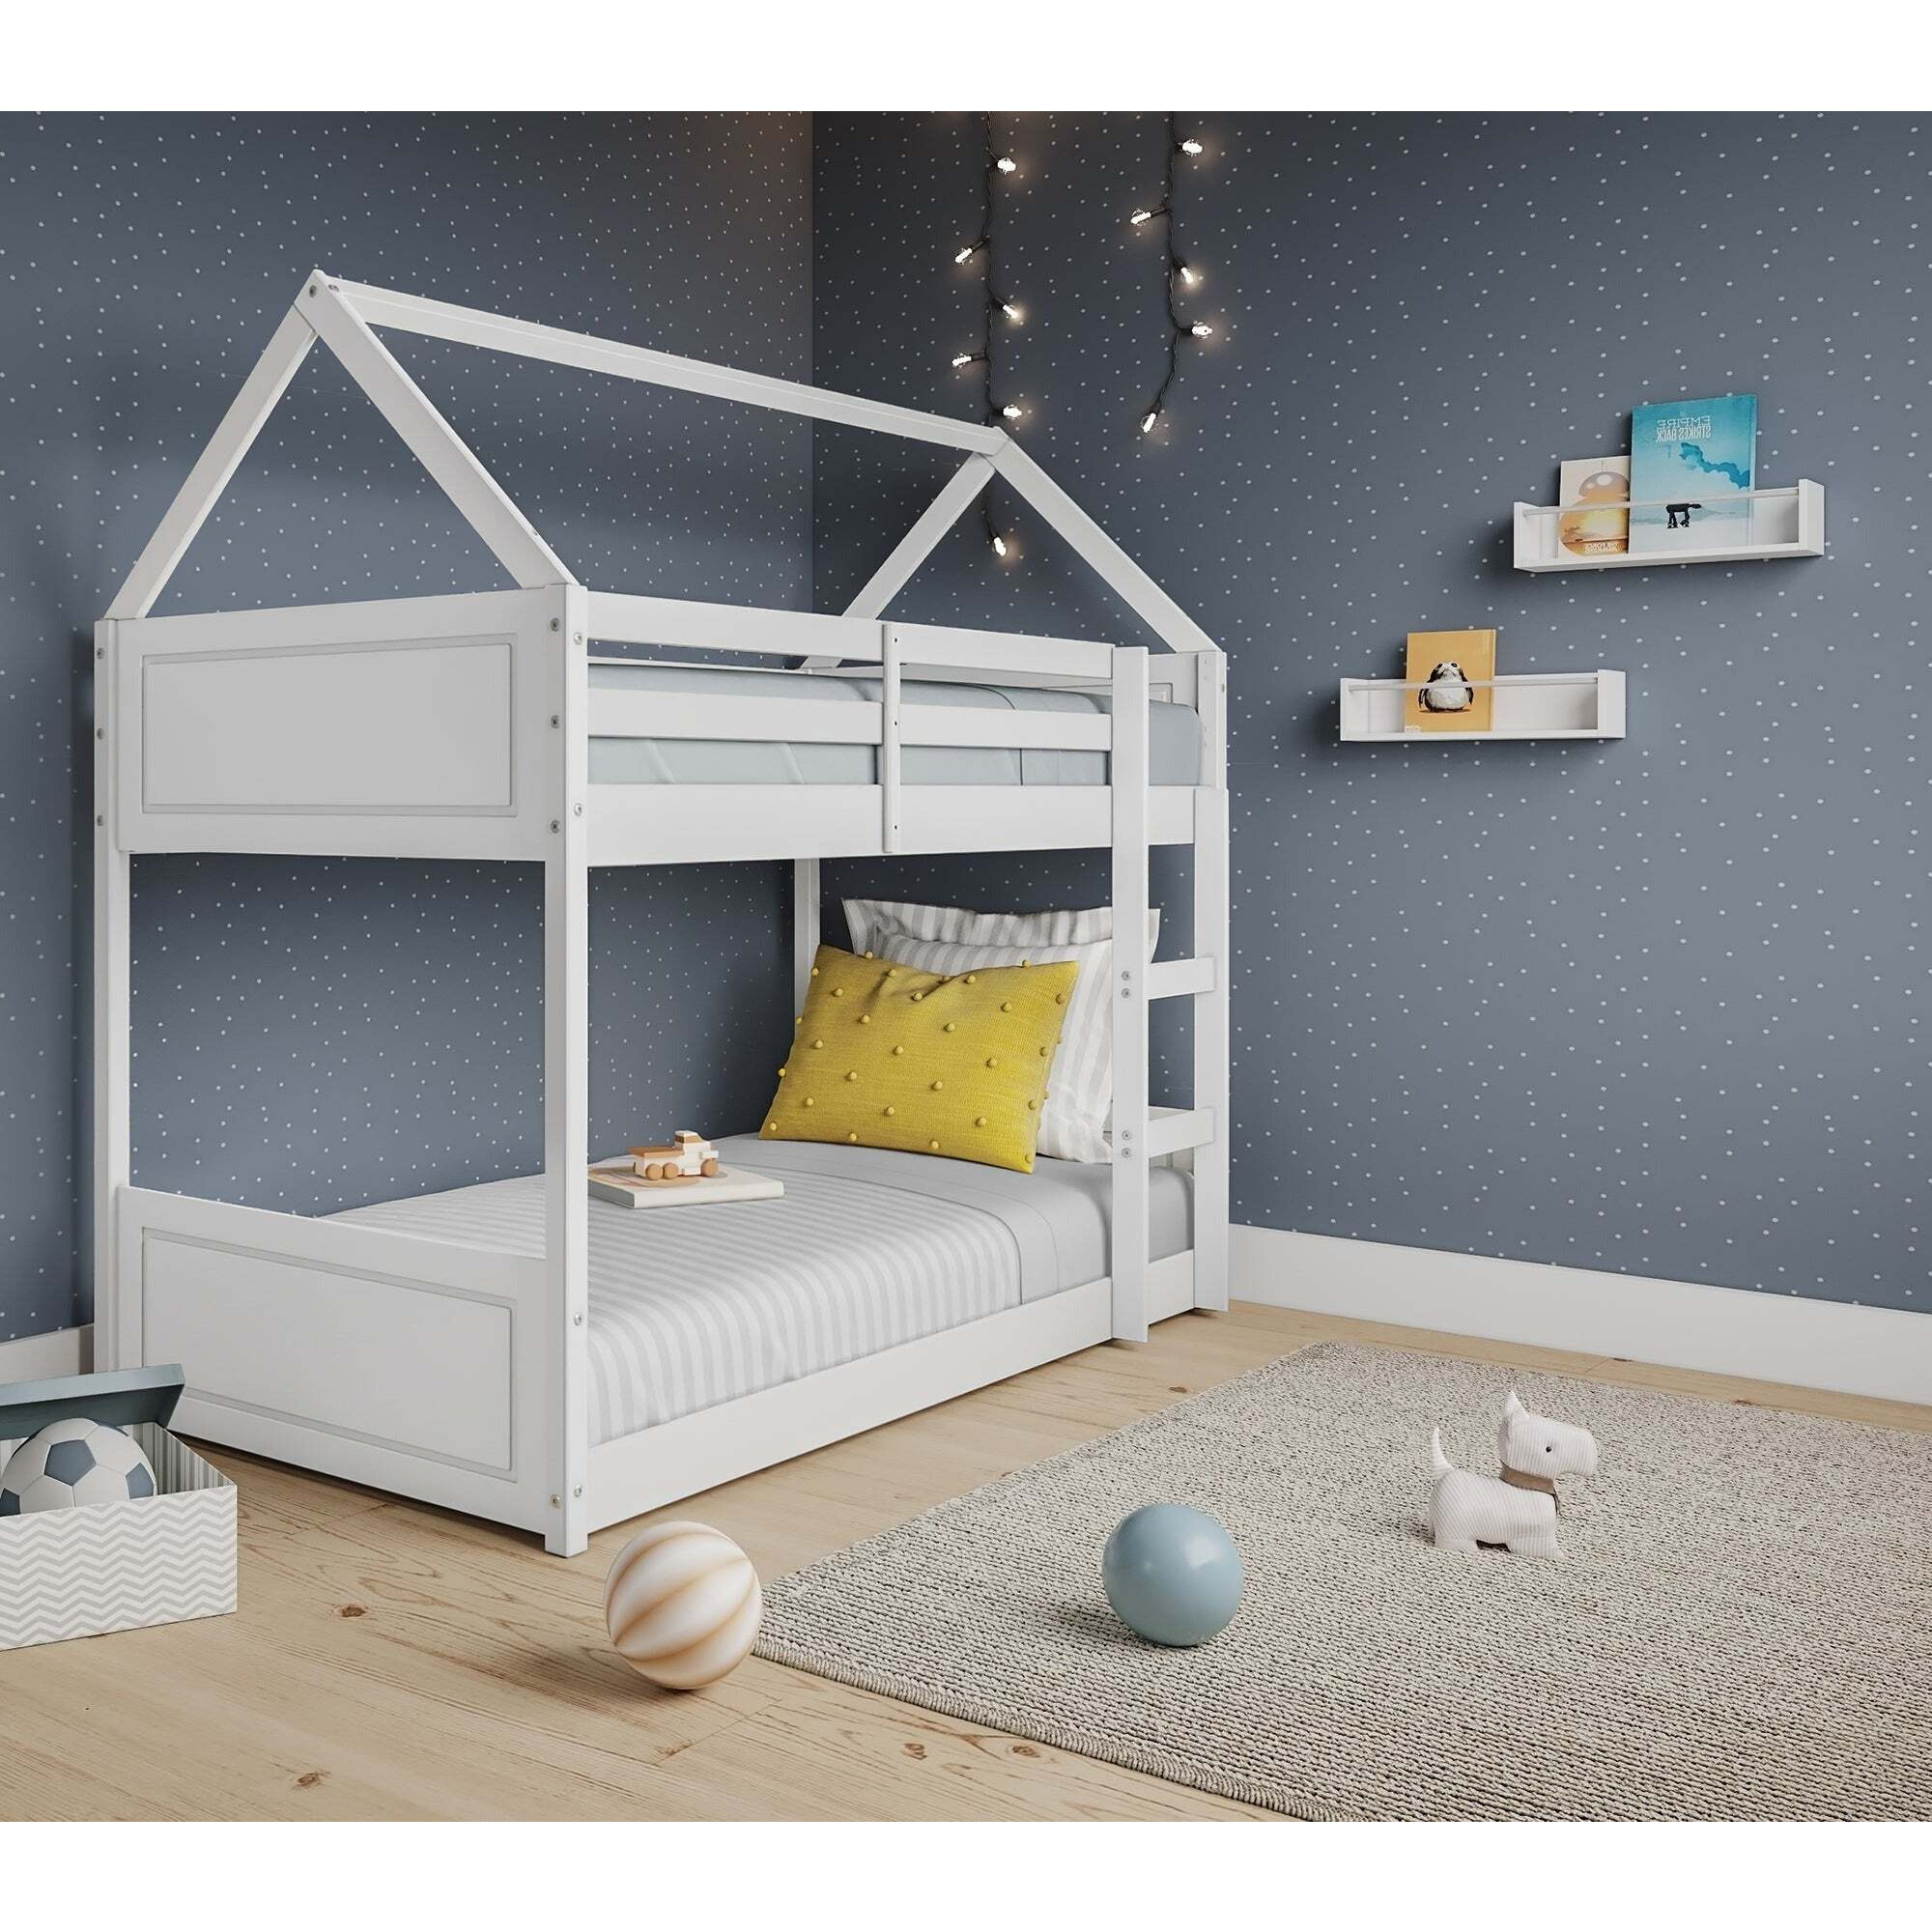 Miller Bunk Bed House Single Kids Frame, White